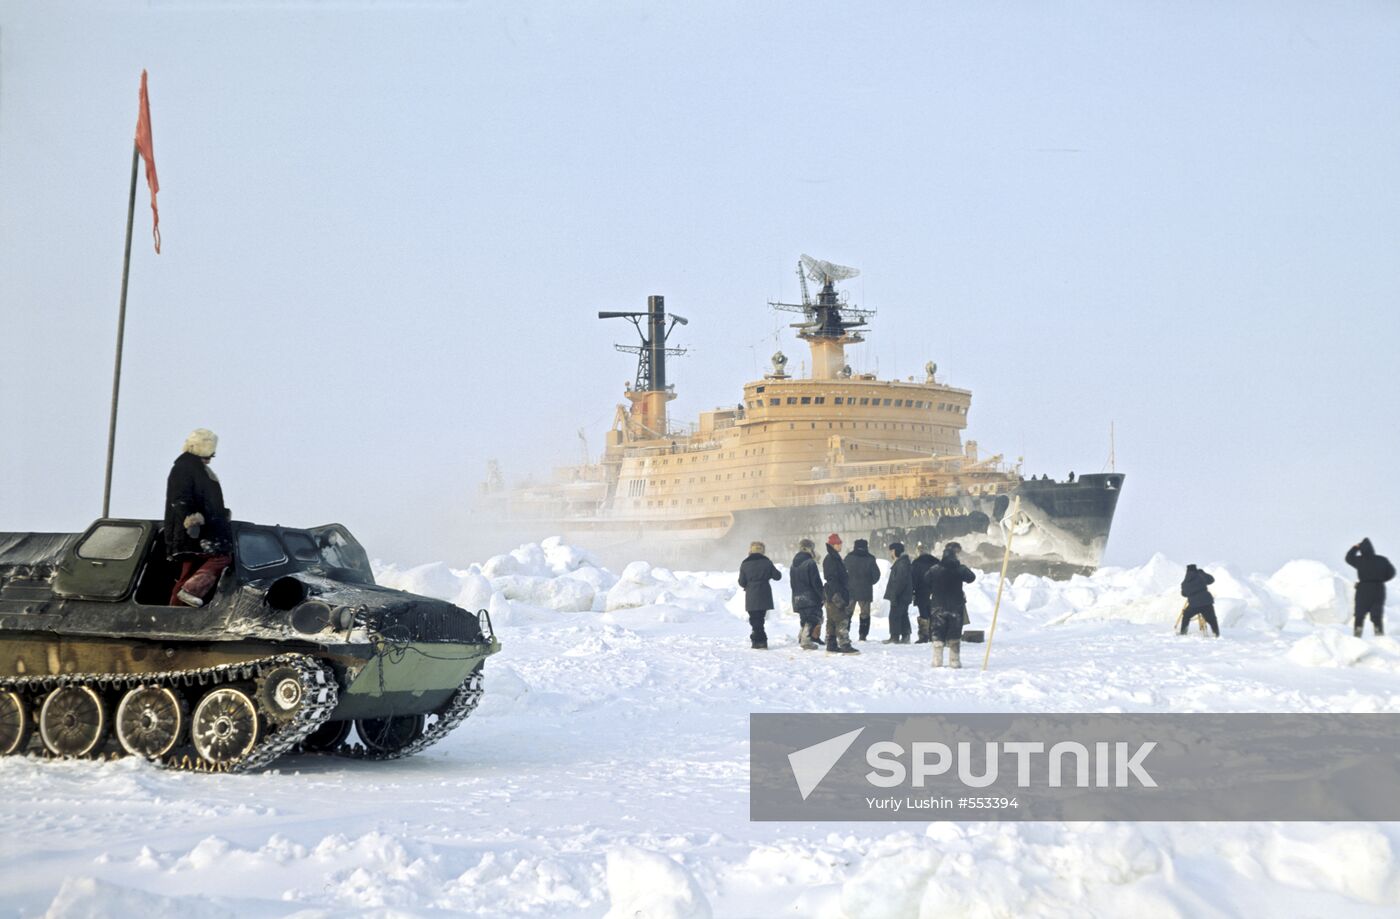 Arctic nuclear-powered icebreaker